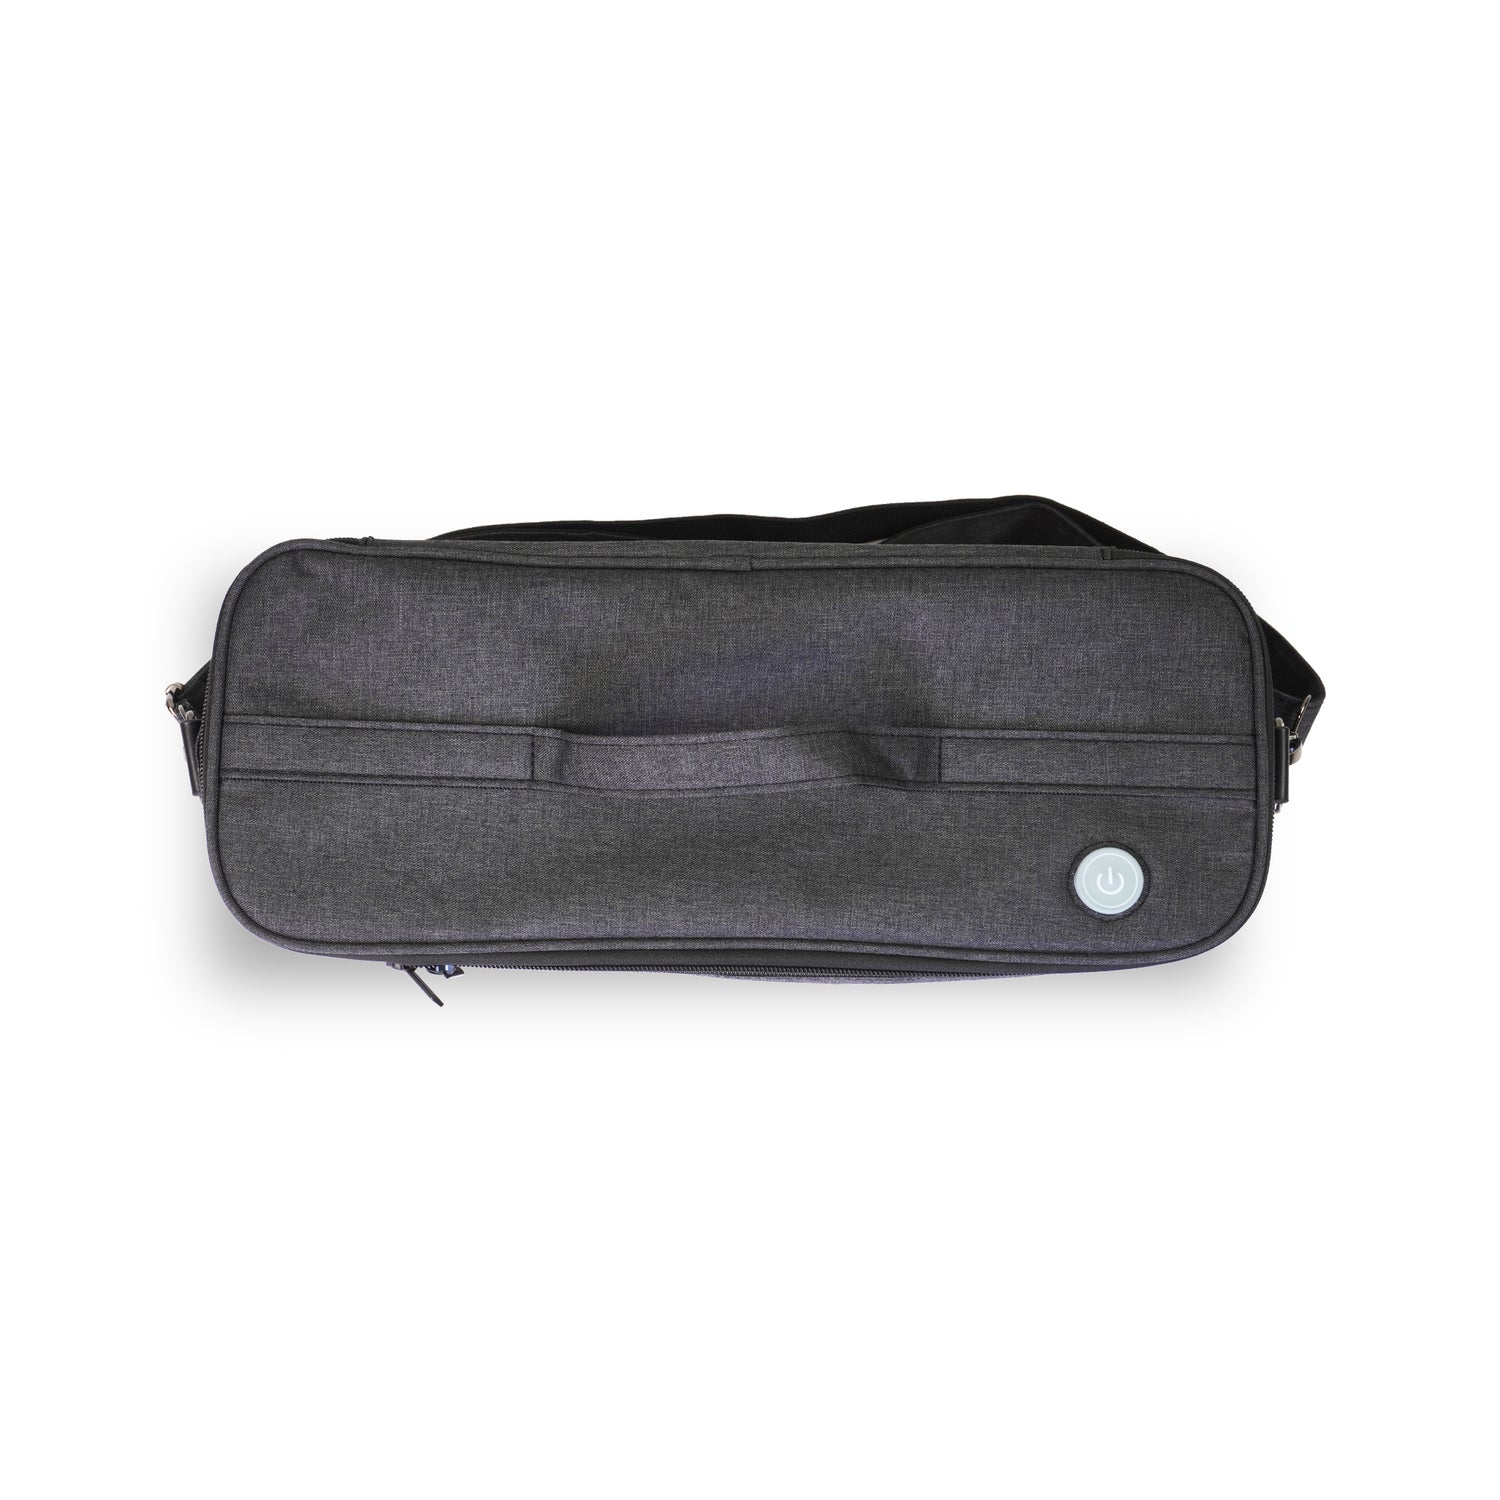 2-in-1 Cooler Bag with UV Light Sterilization - Top